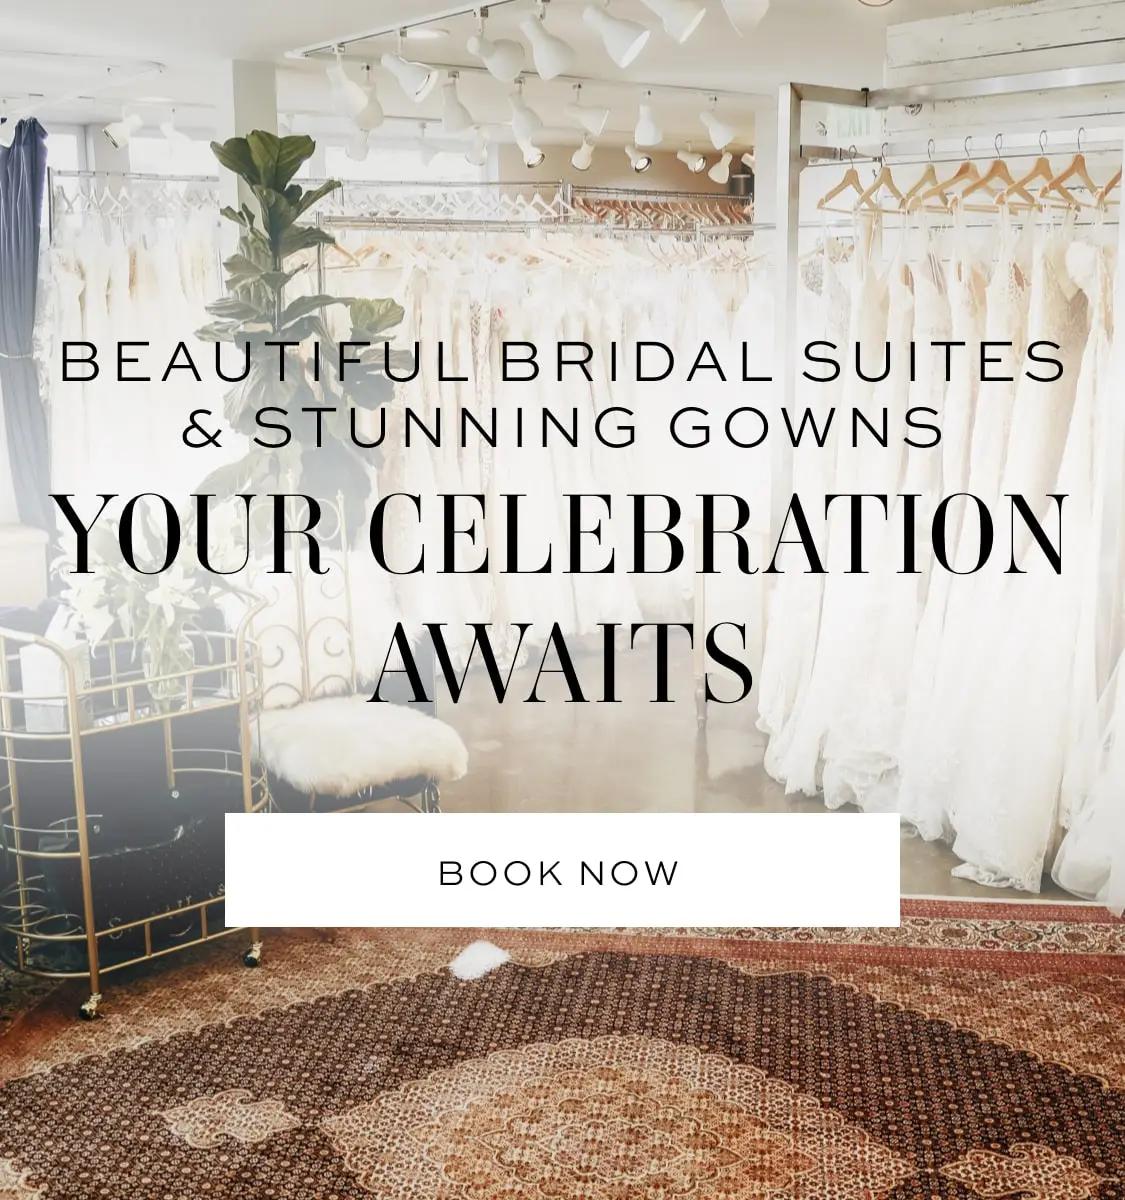 Stunning bridal suites at Samila Bridal. Find your dream wedding dress